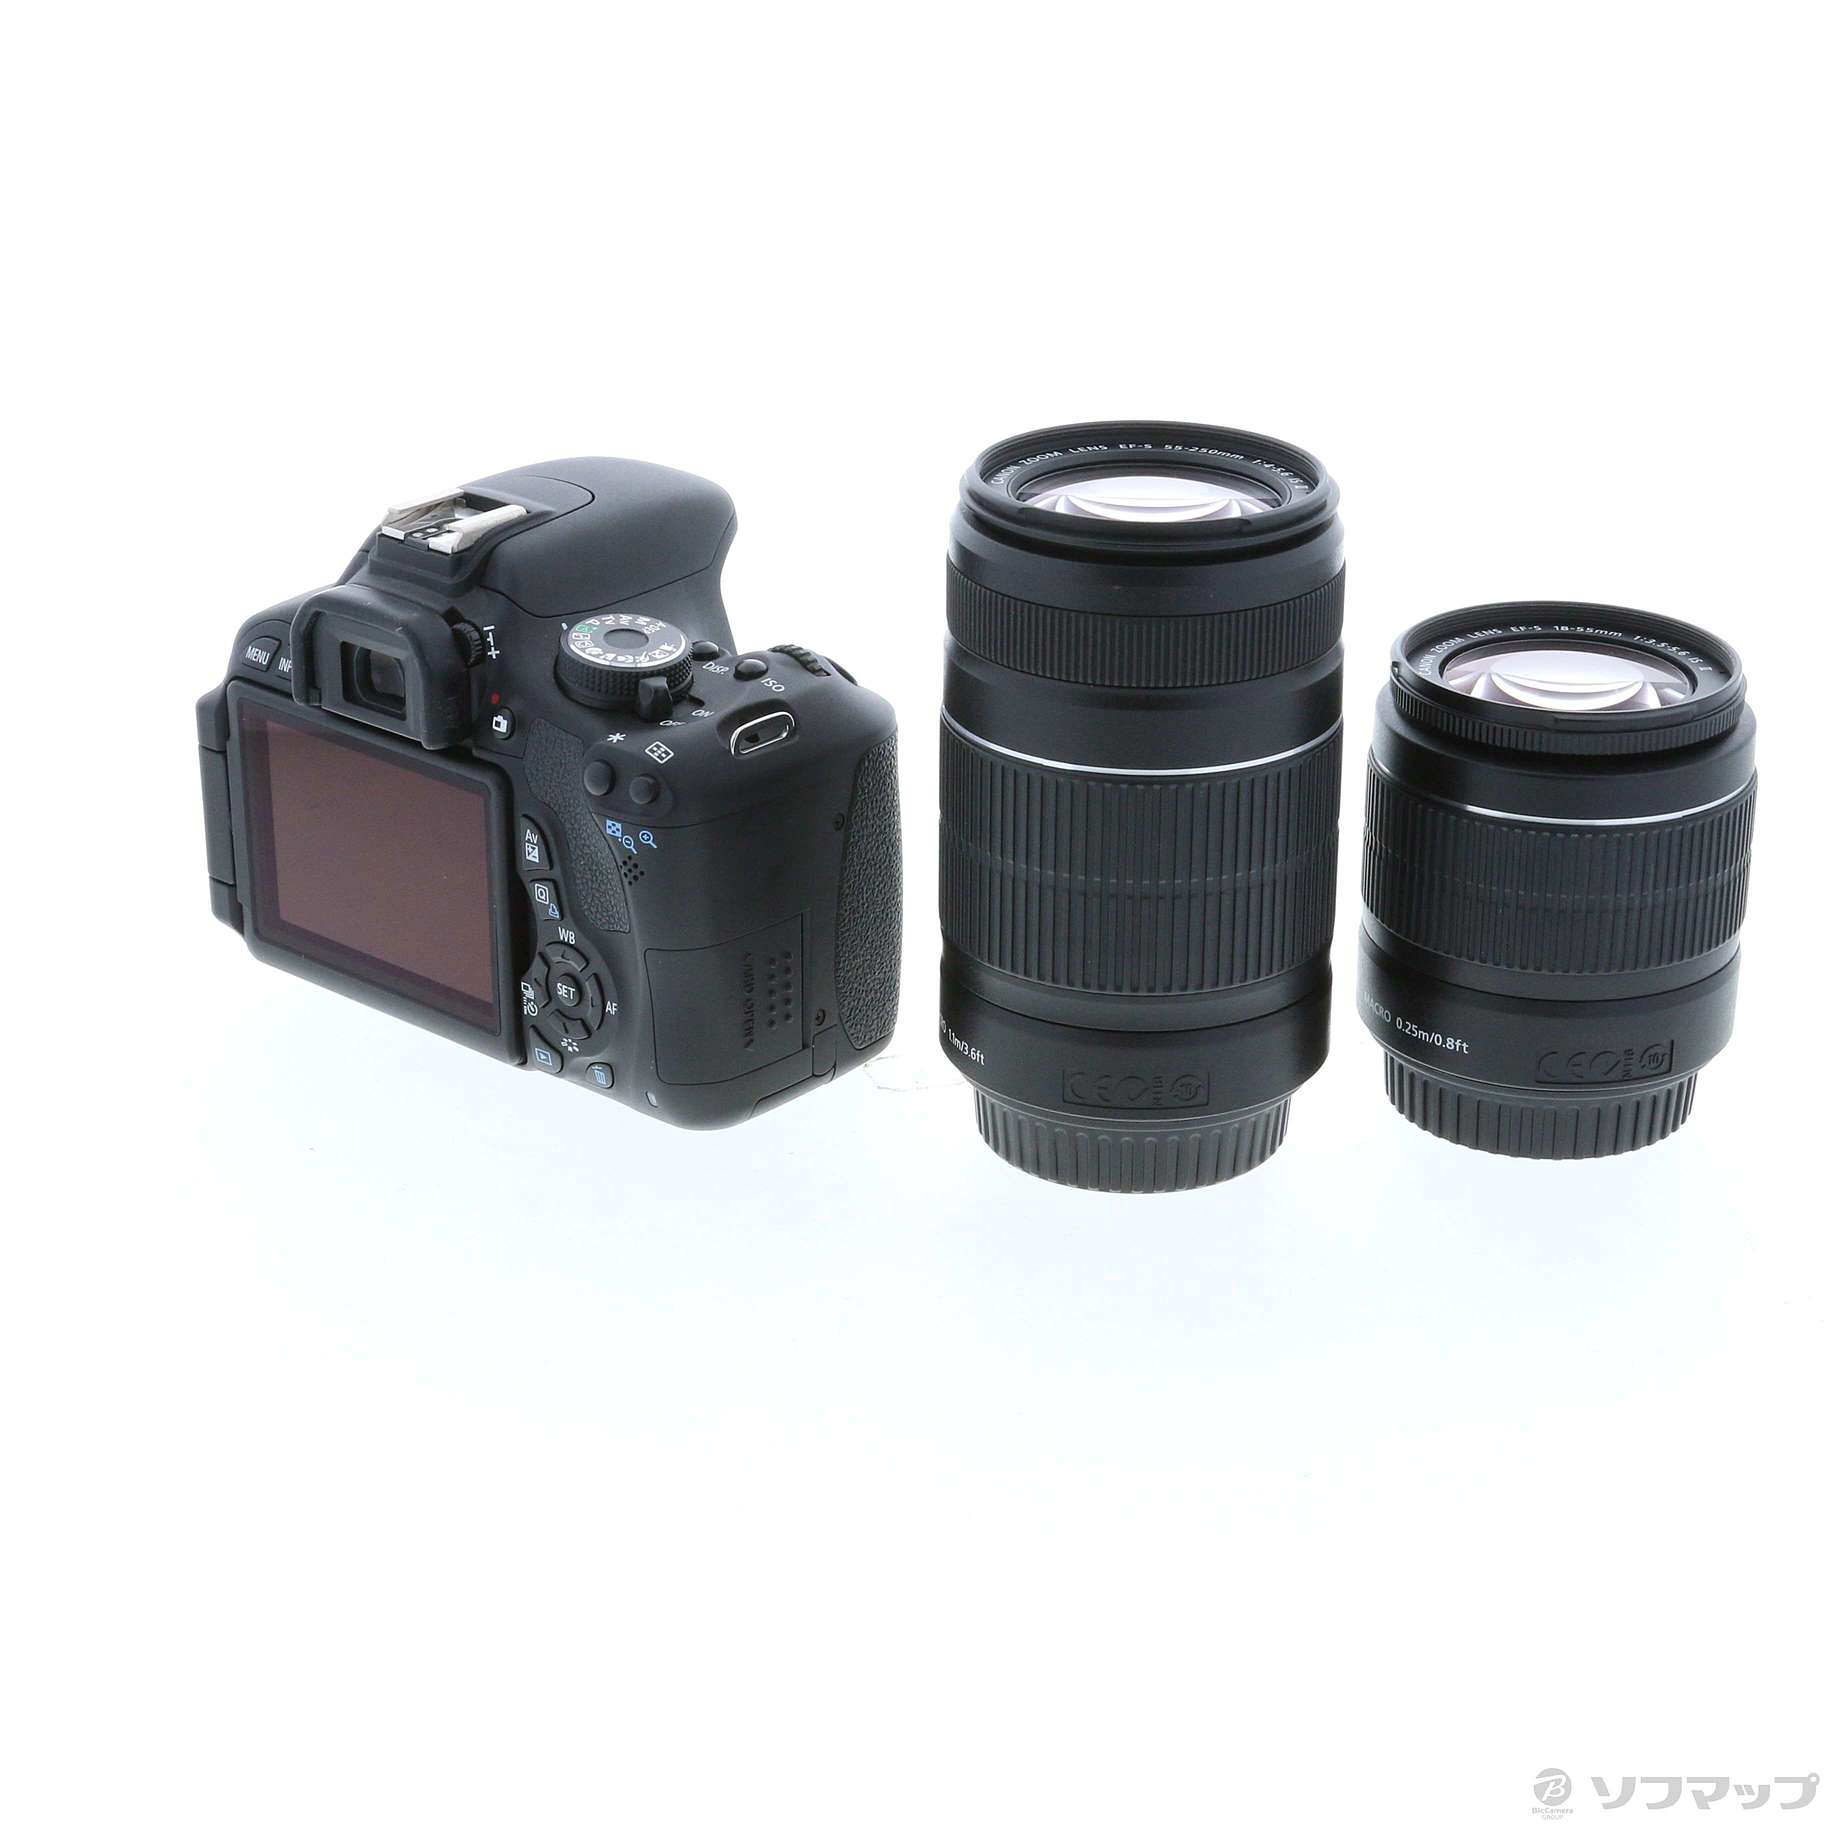 Canon EOS KISS X5 Wズームキット